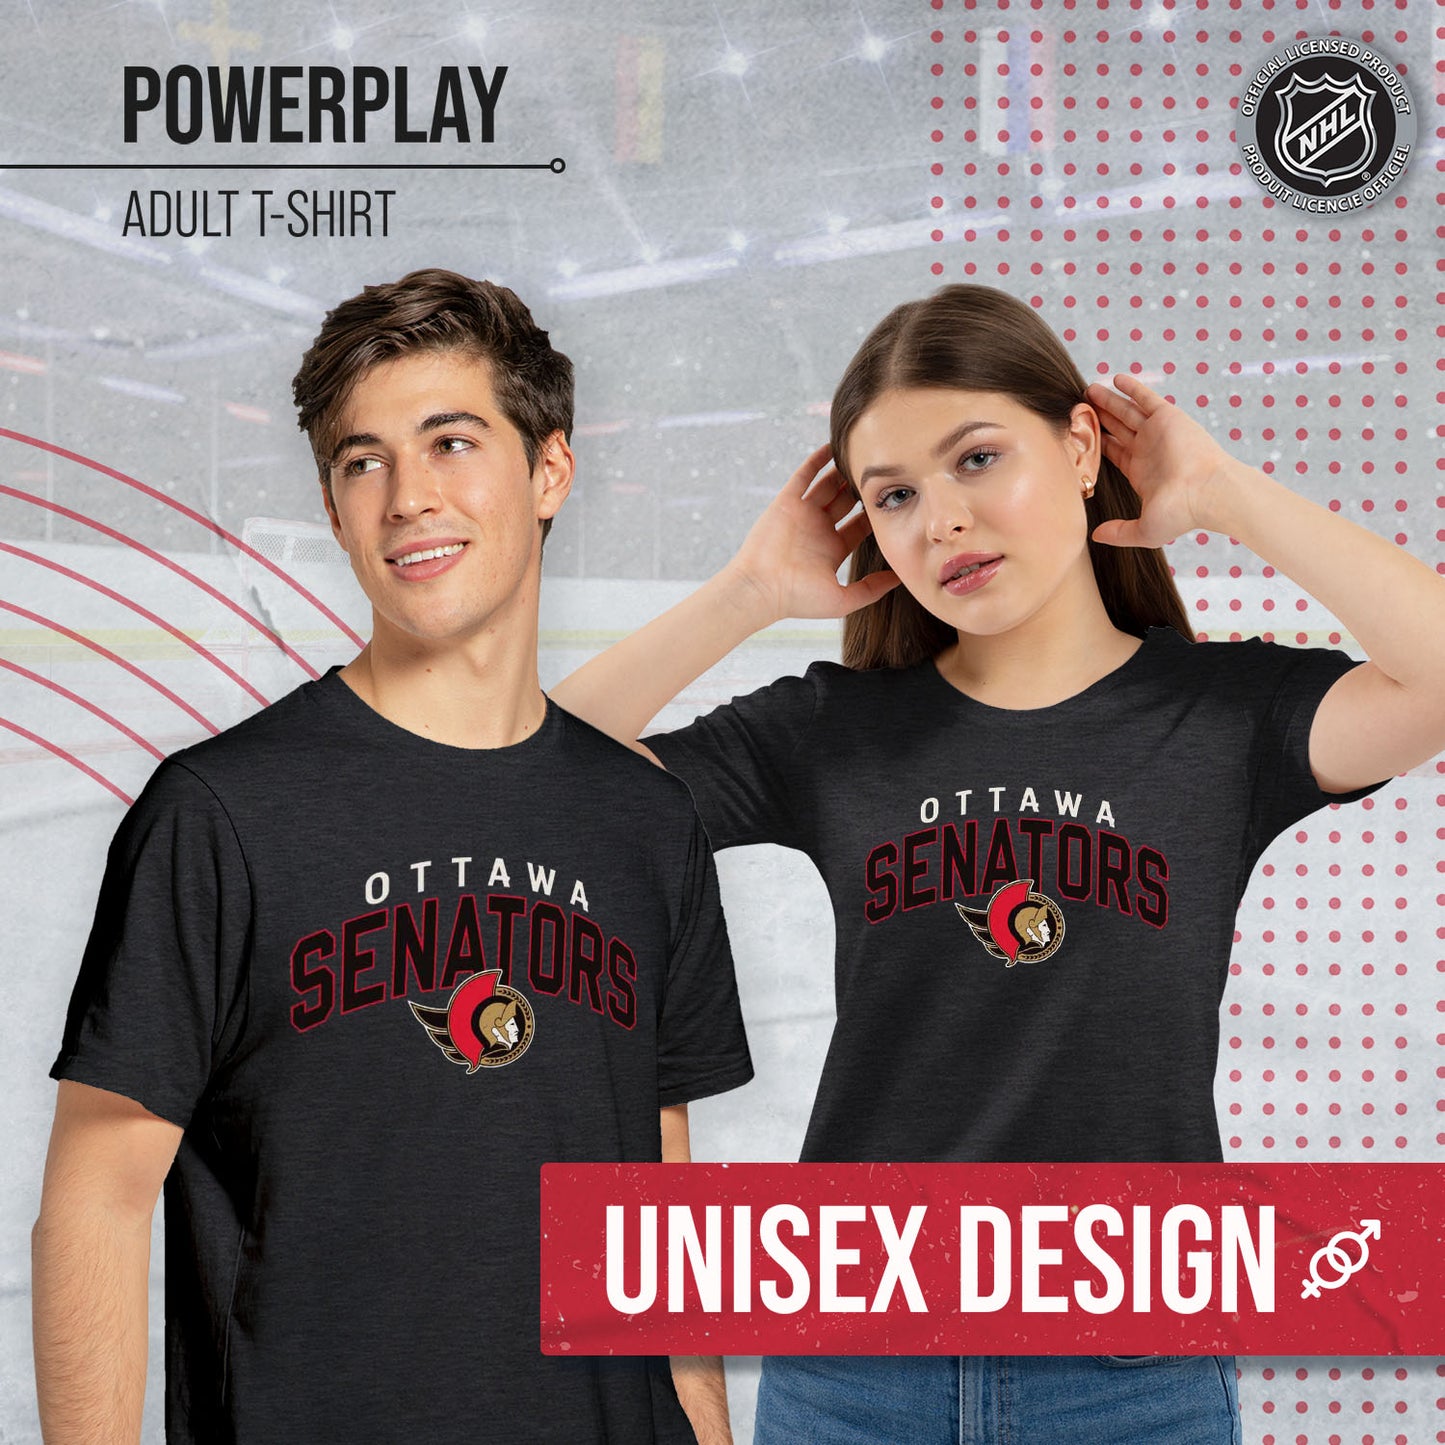 Ottawa Senators NHL Adult Powerplay Heathered Unisex T-Shirt - Black Heather